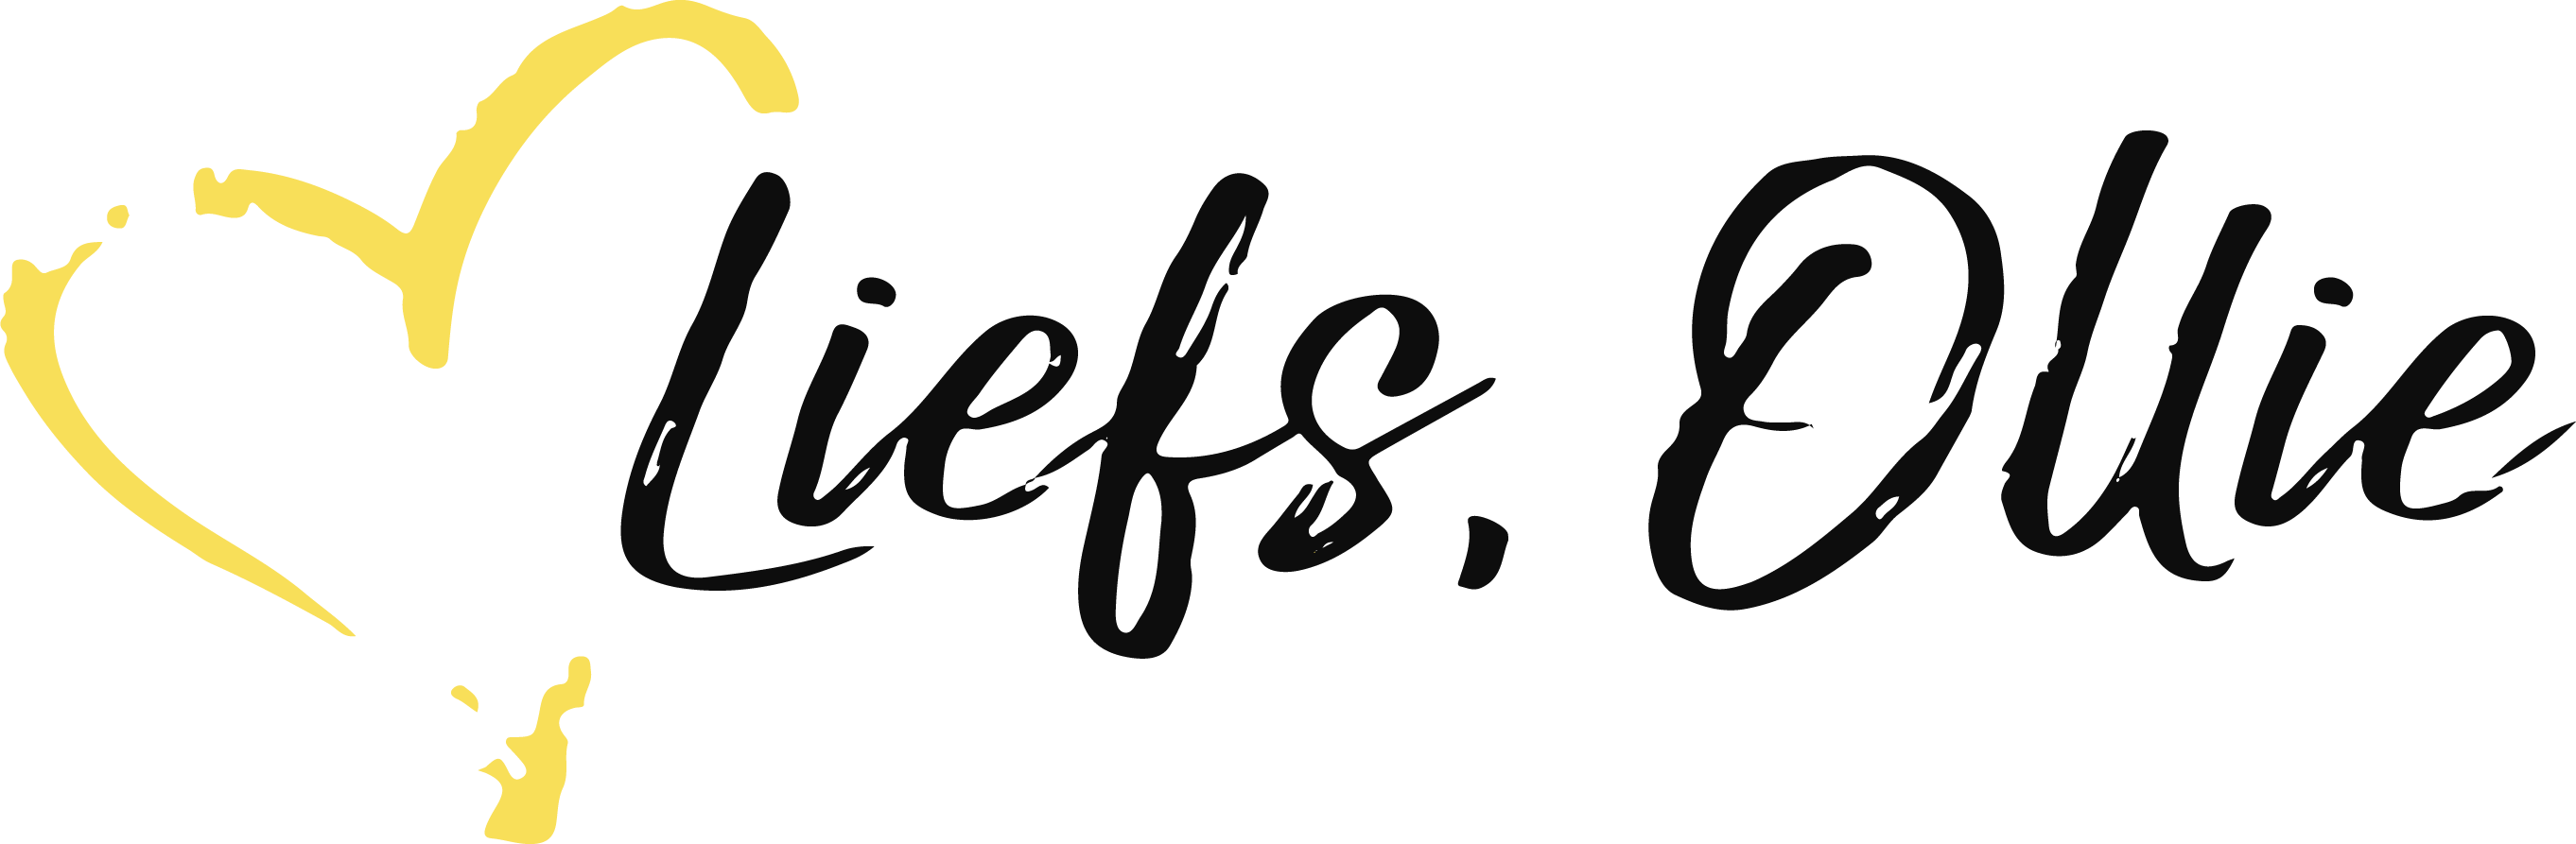 Liefs, Ollie logo